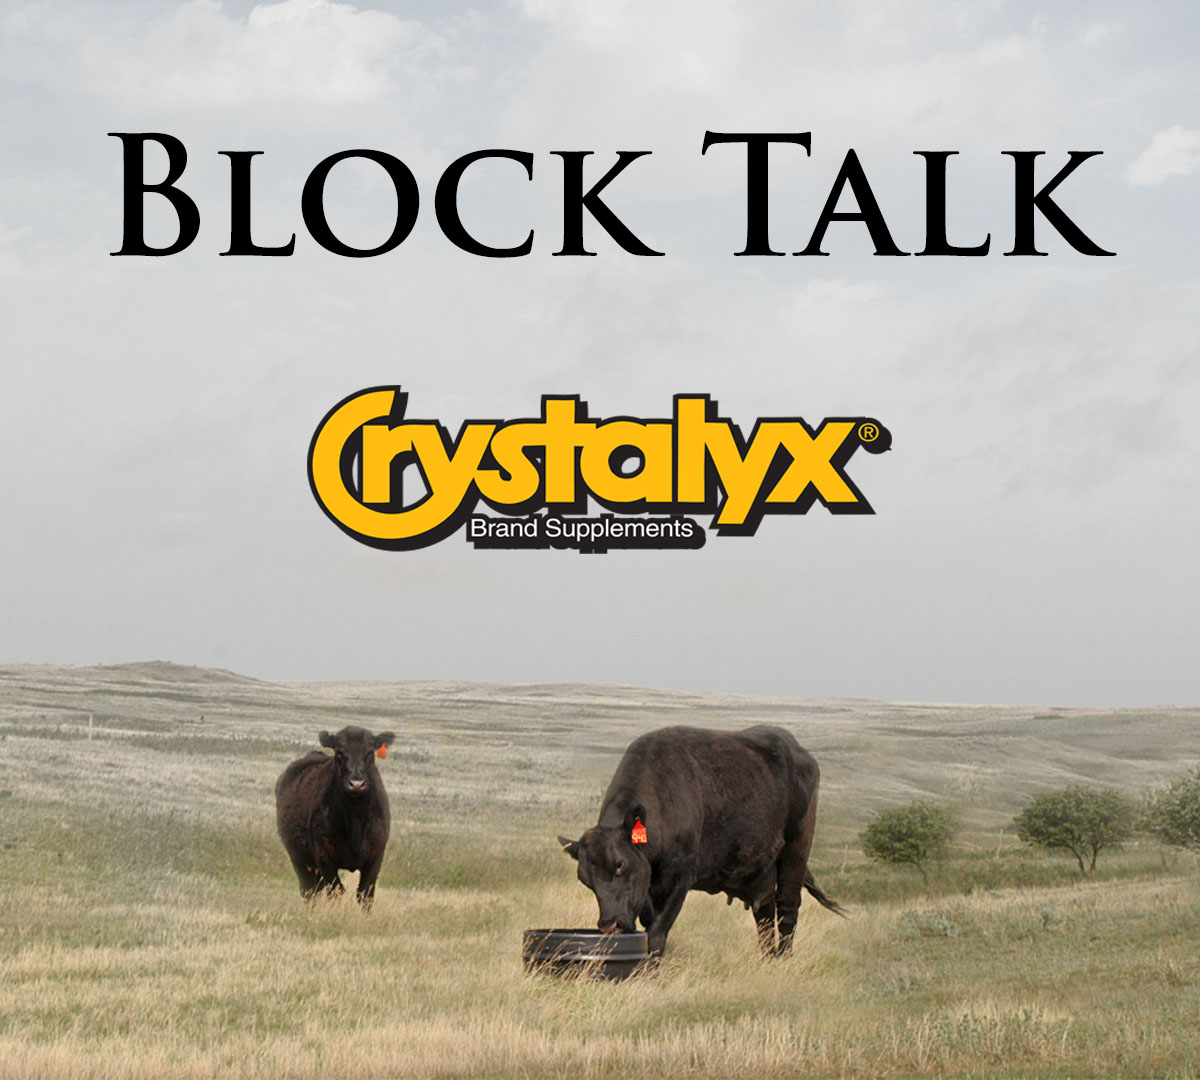 Blcok Talk logo